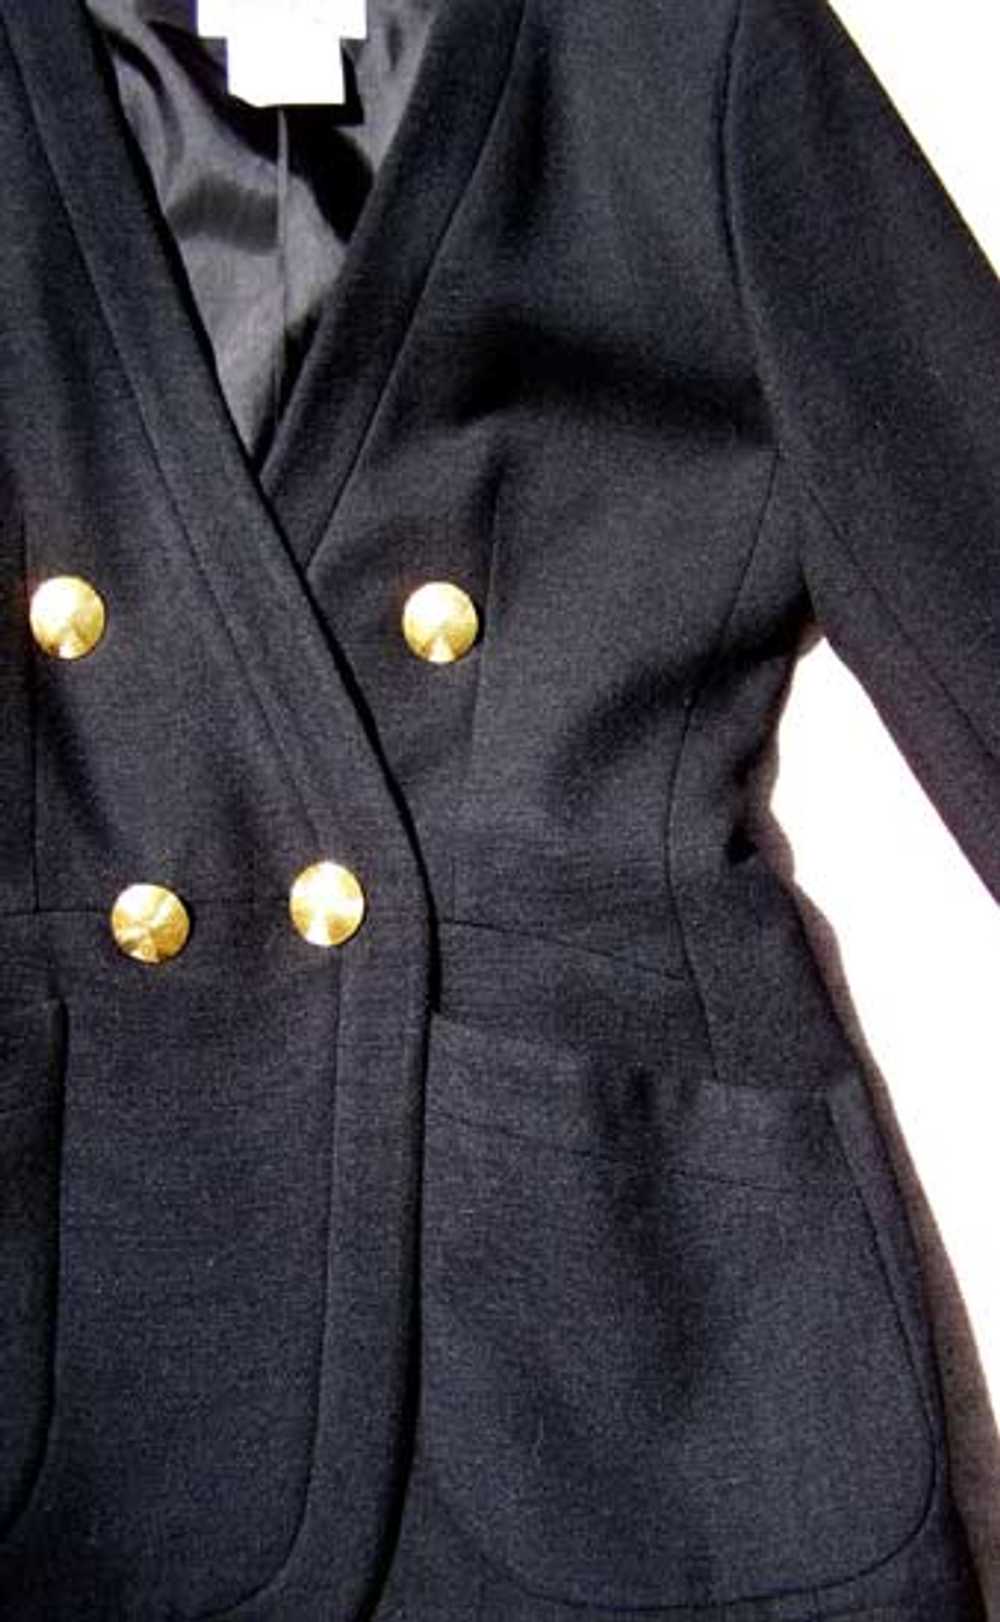 YSL Rive Gauche jacket - image 6